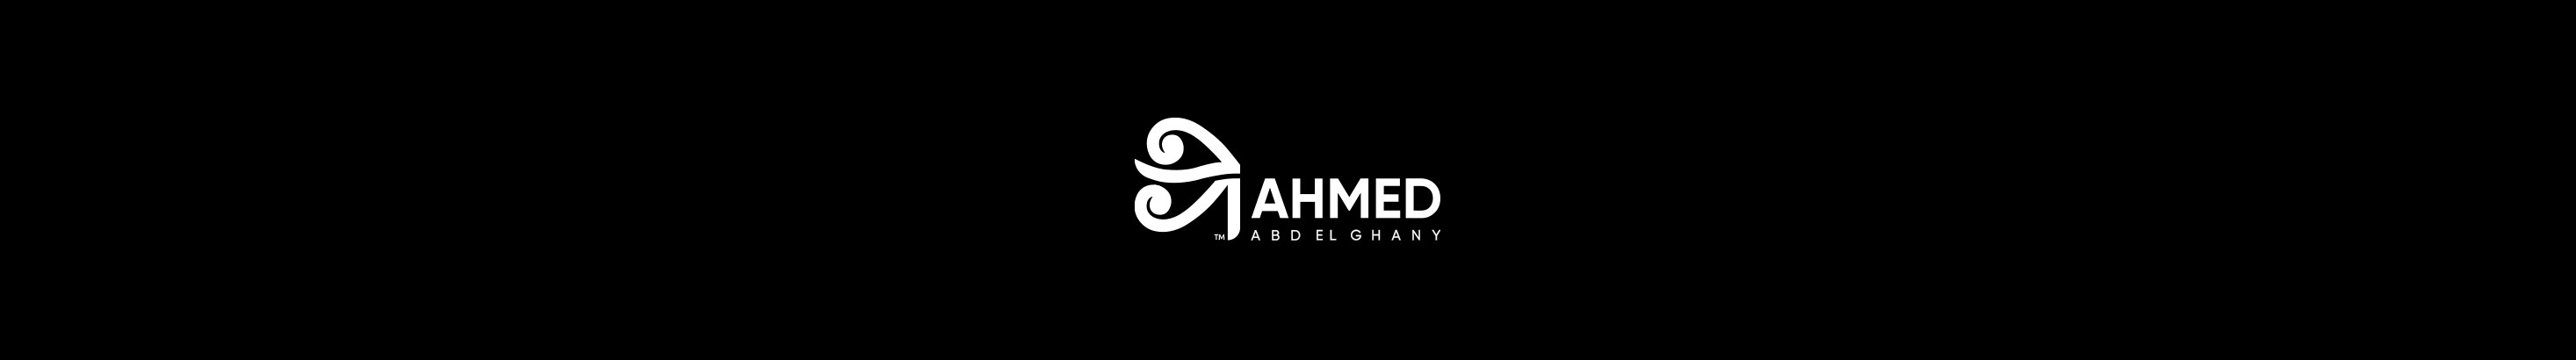 Ahmed Abd El Ghany's profile banner